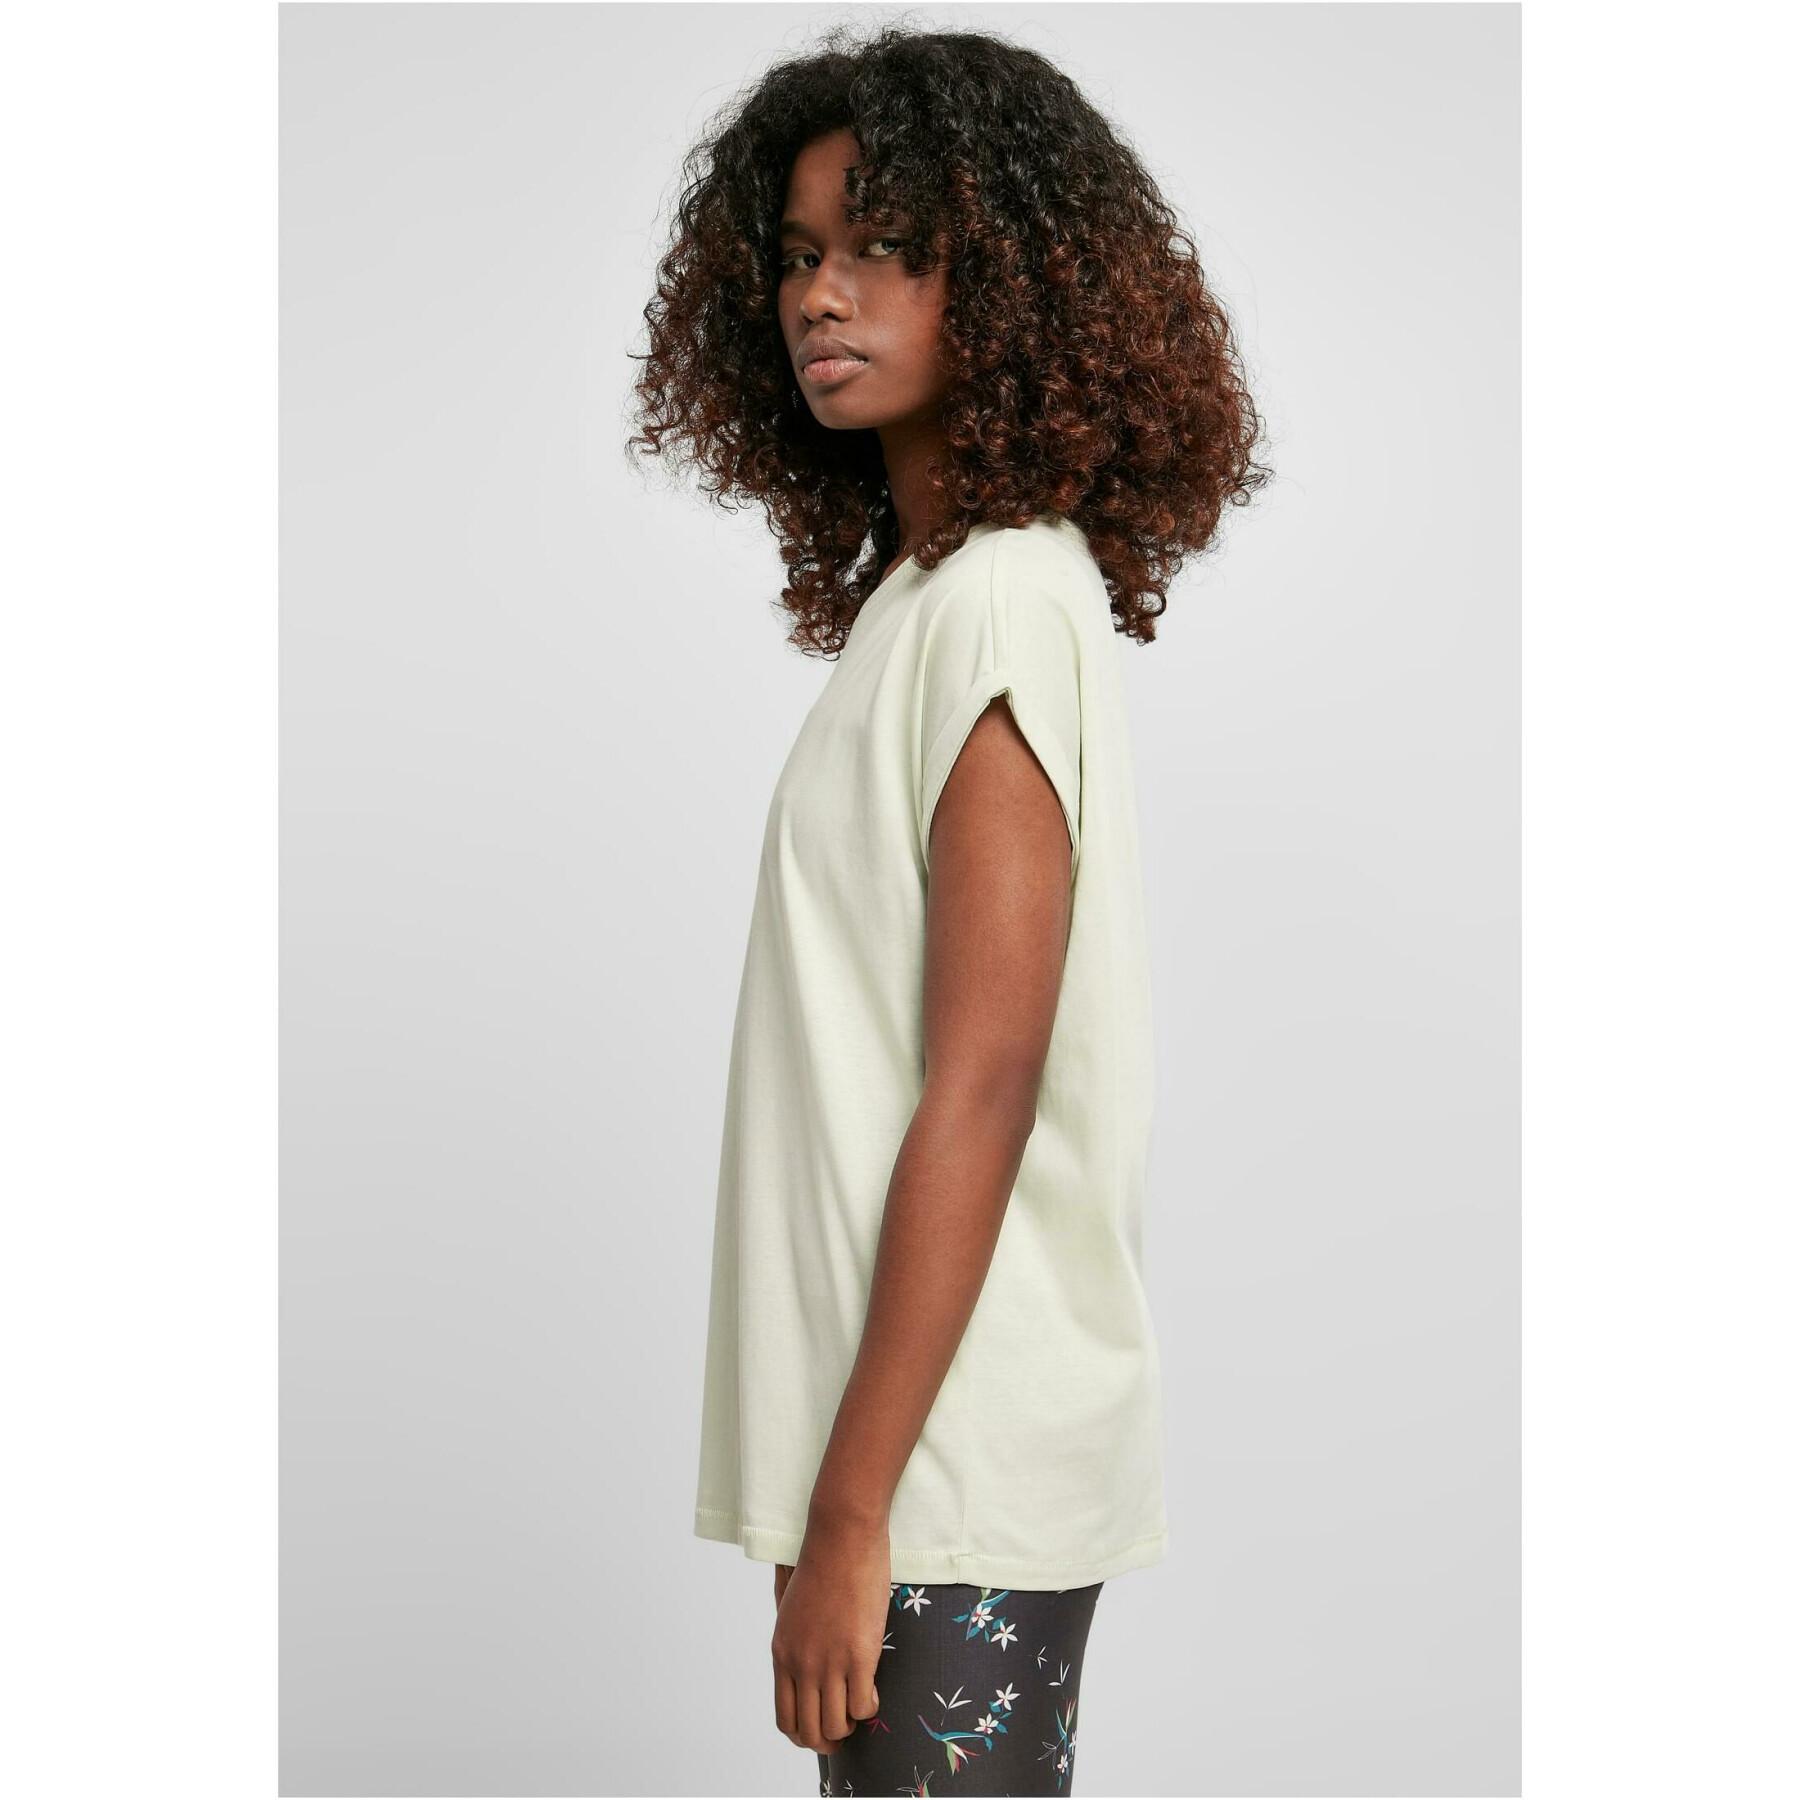 T-shirt femme Urban Classics Extended shoulder